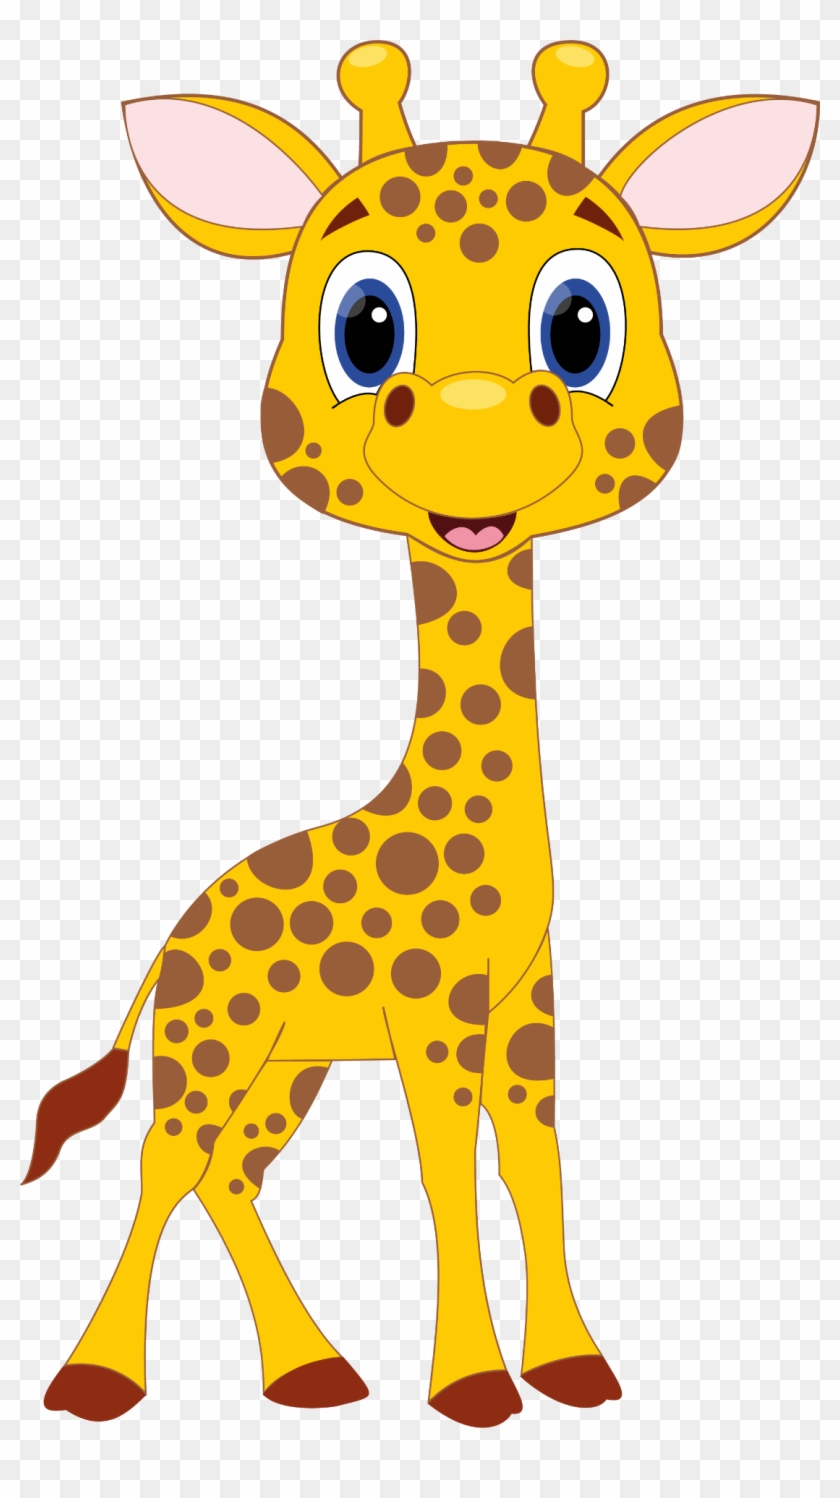 Download Baby Giraffe Cartoon Download Giraffe Cartoon Free Transparent Png Clipart Images Download